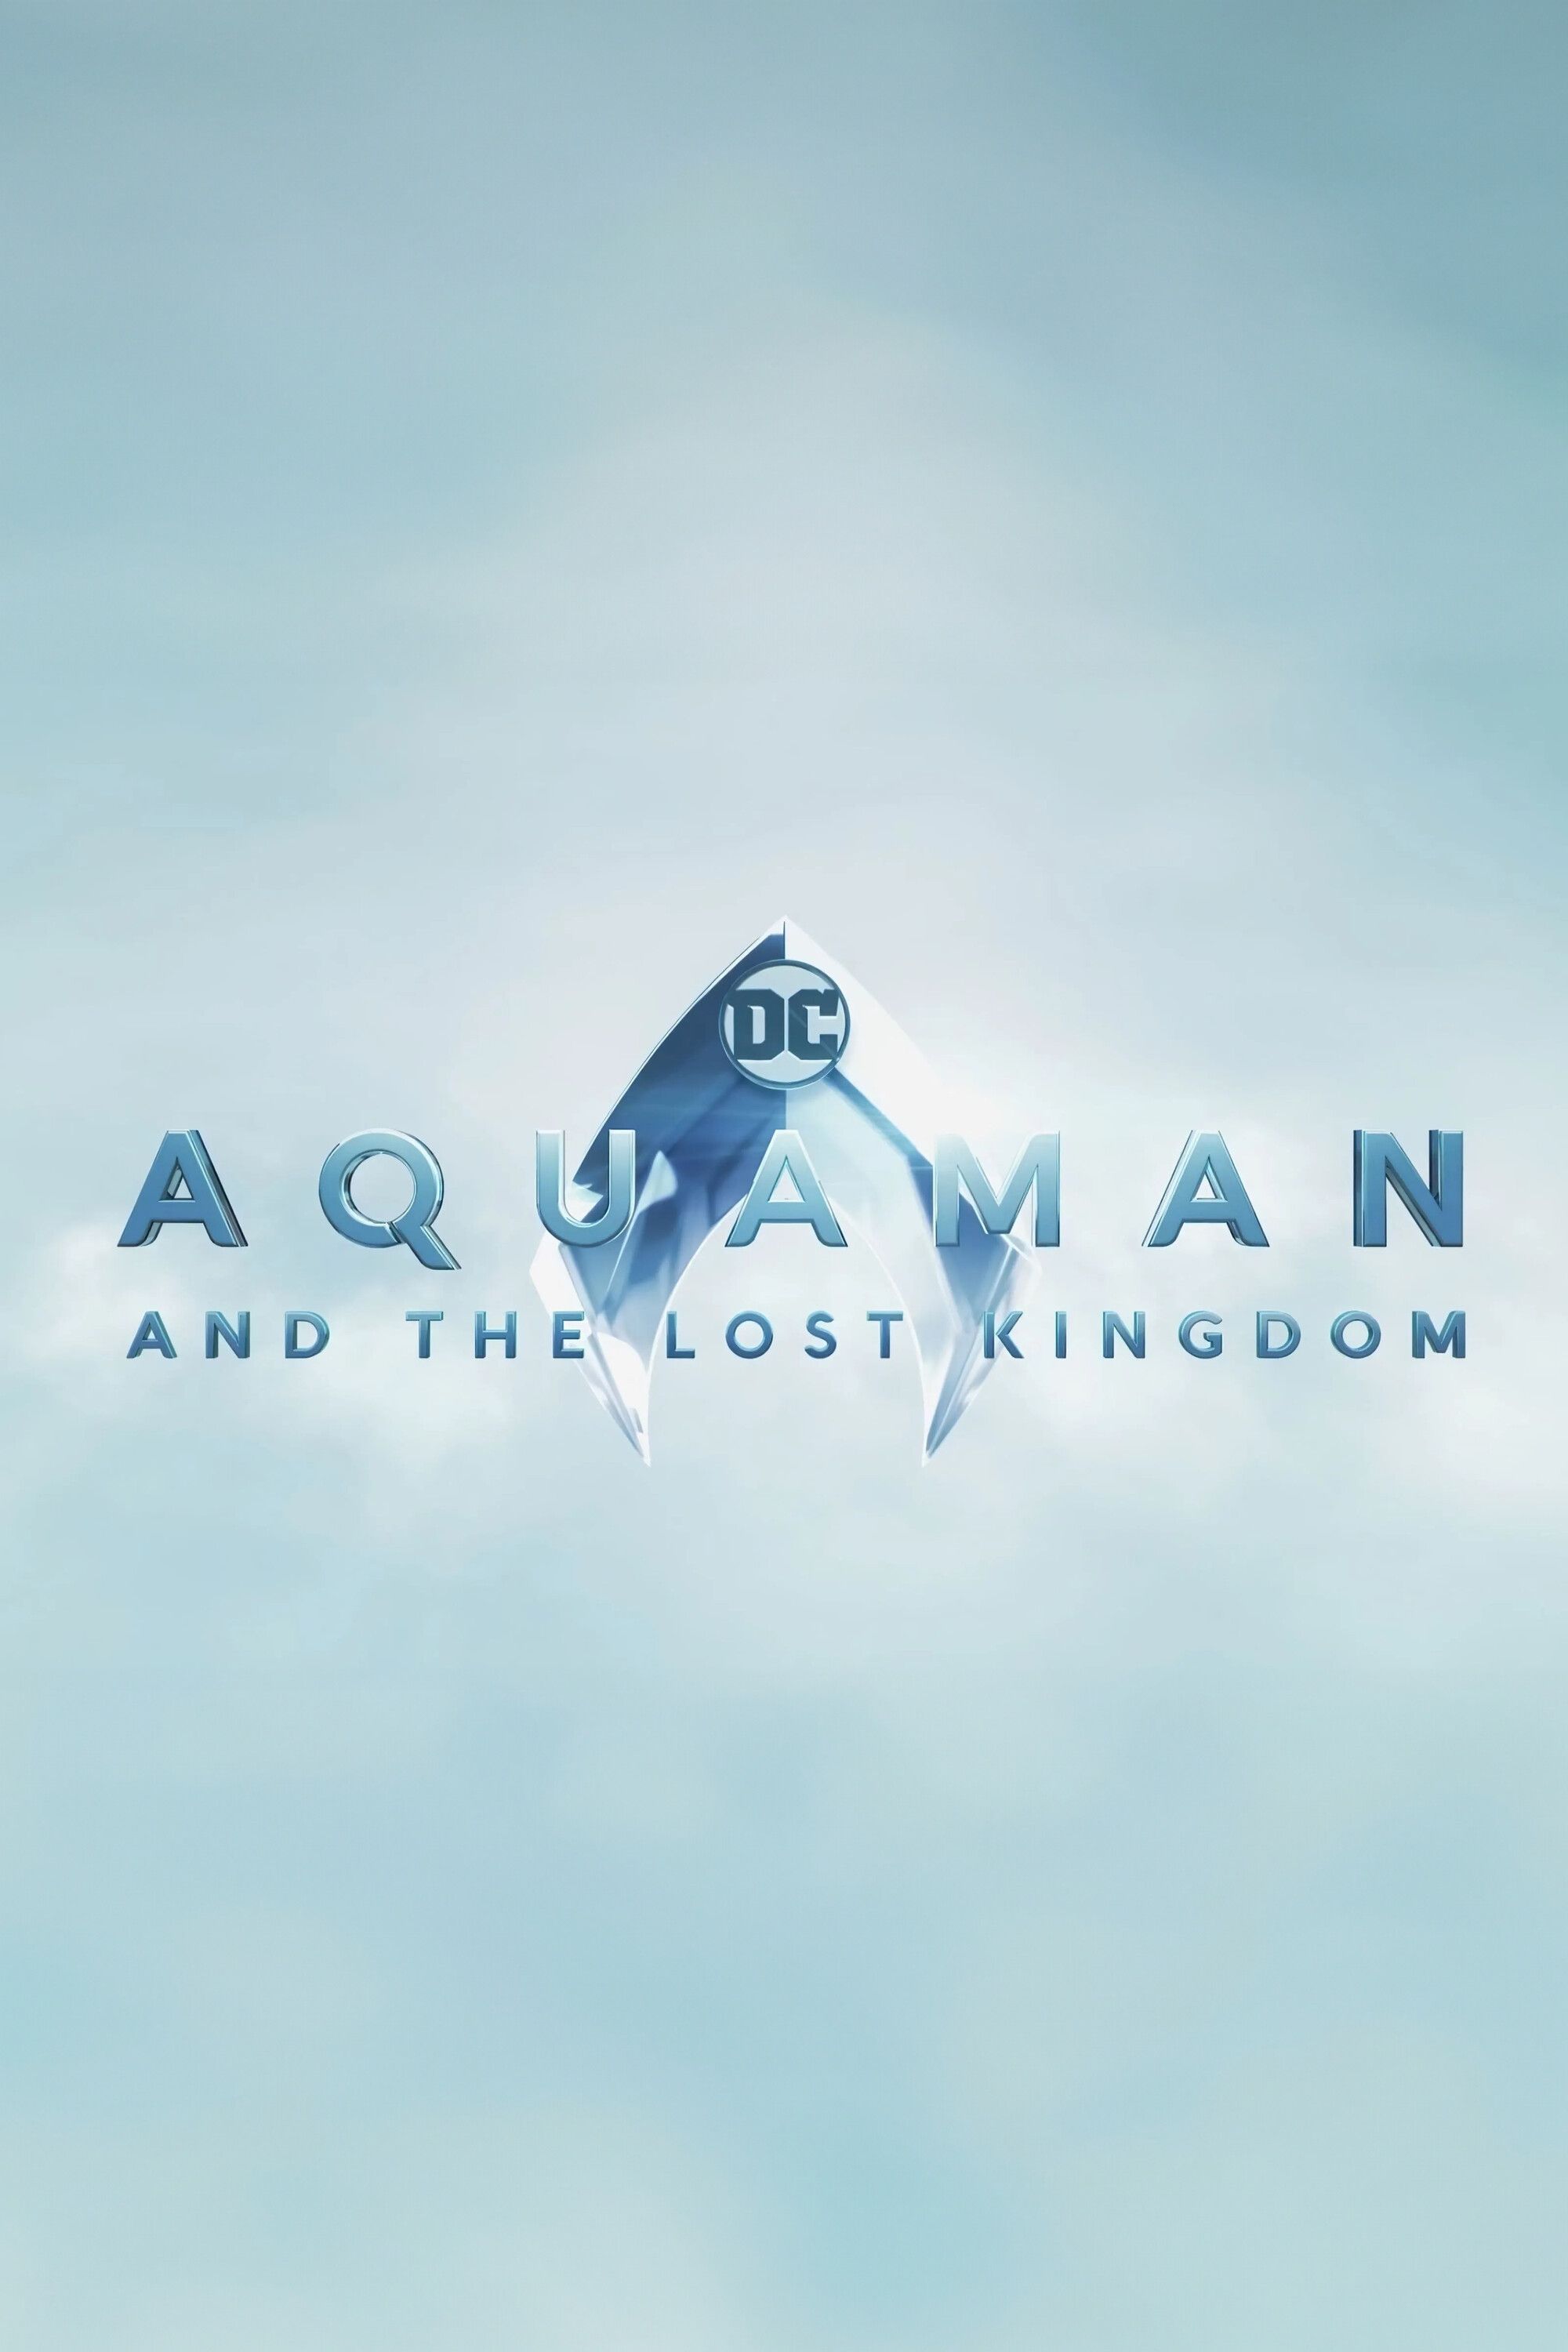 Aquaman 2 Lost Kingdom 2023 Film Information Und Trailer Kinocheck